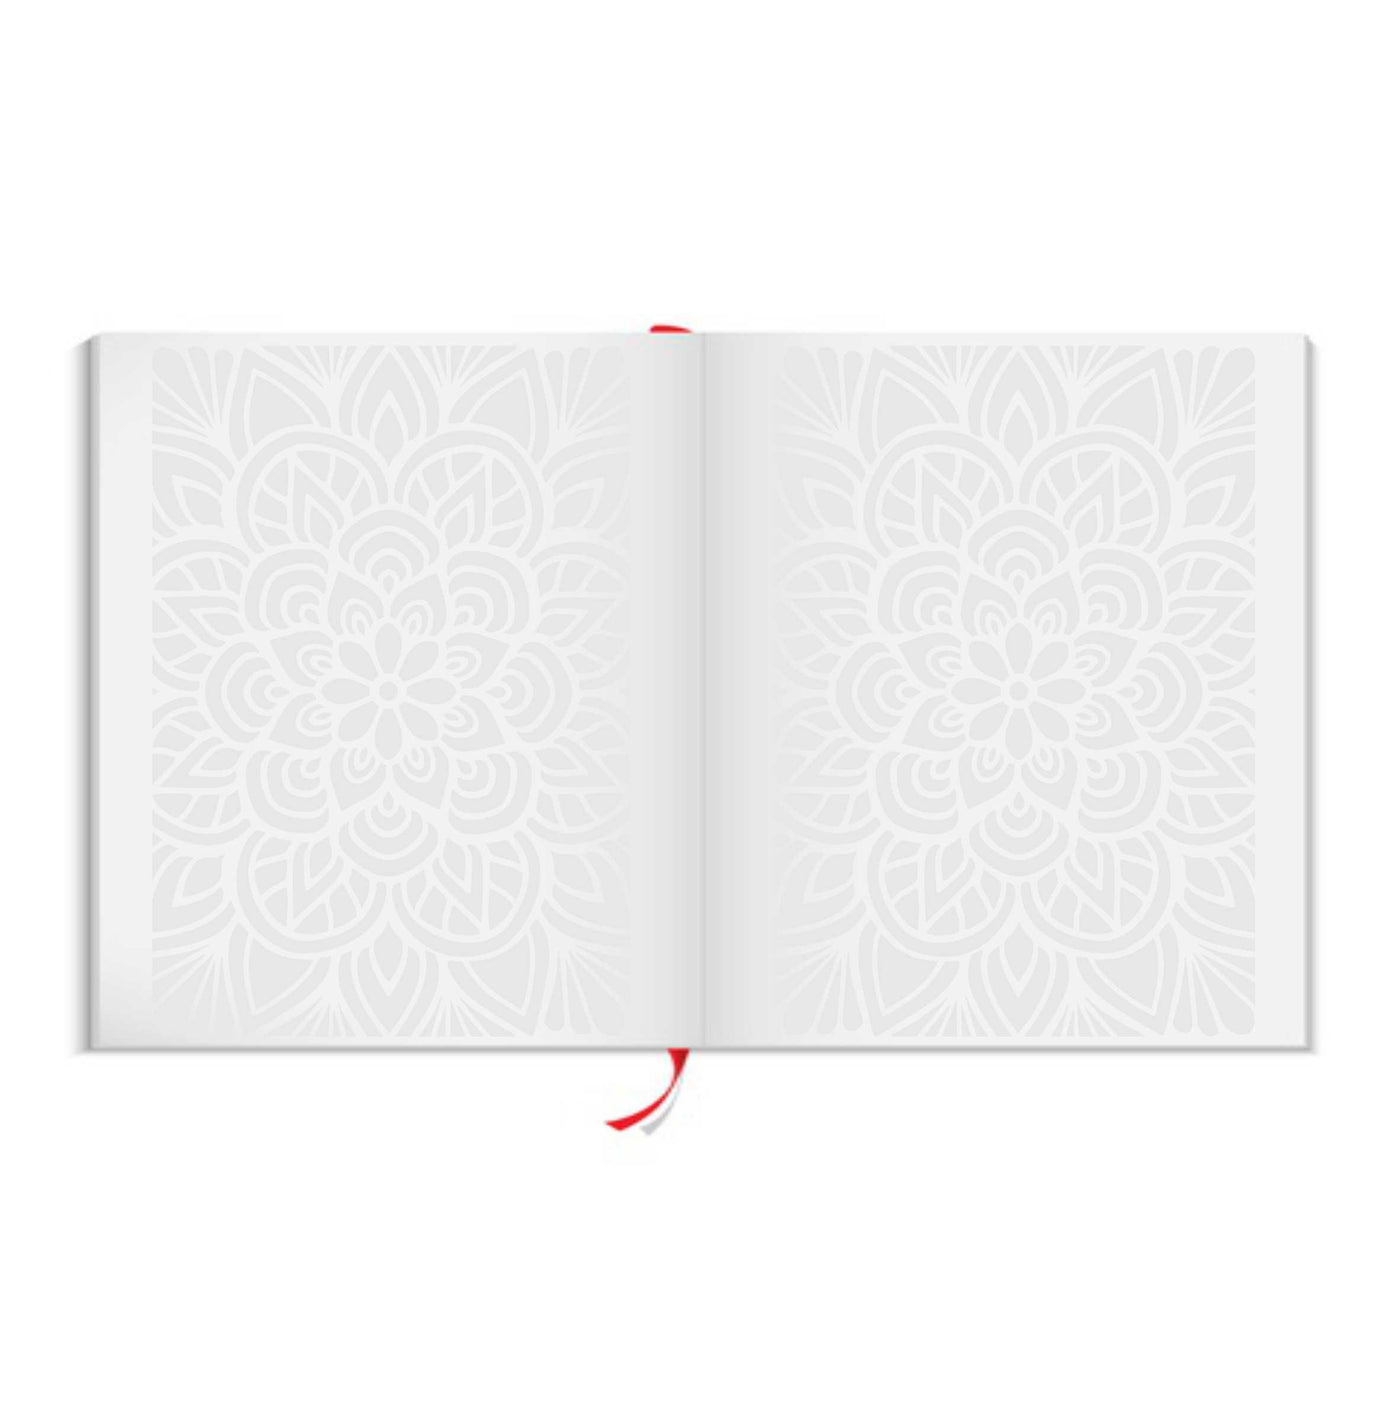 Mandala Layering Stencil- Layering use to add Texture and Design